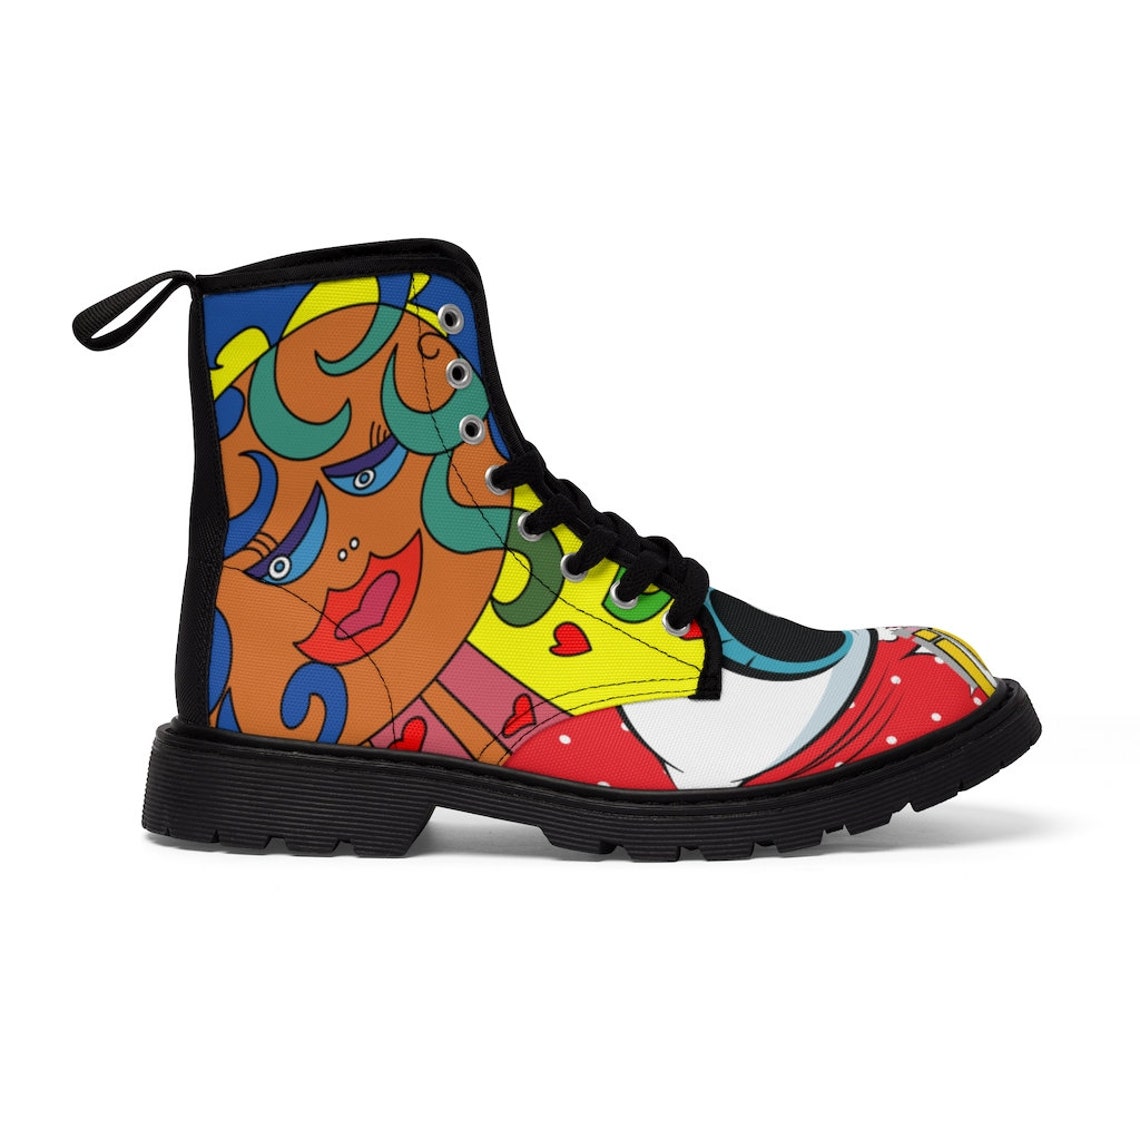 Boots Women's Canvas Boots Pop Art Funky Shoes | Etsy